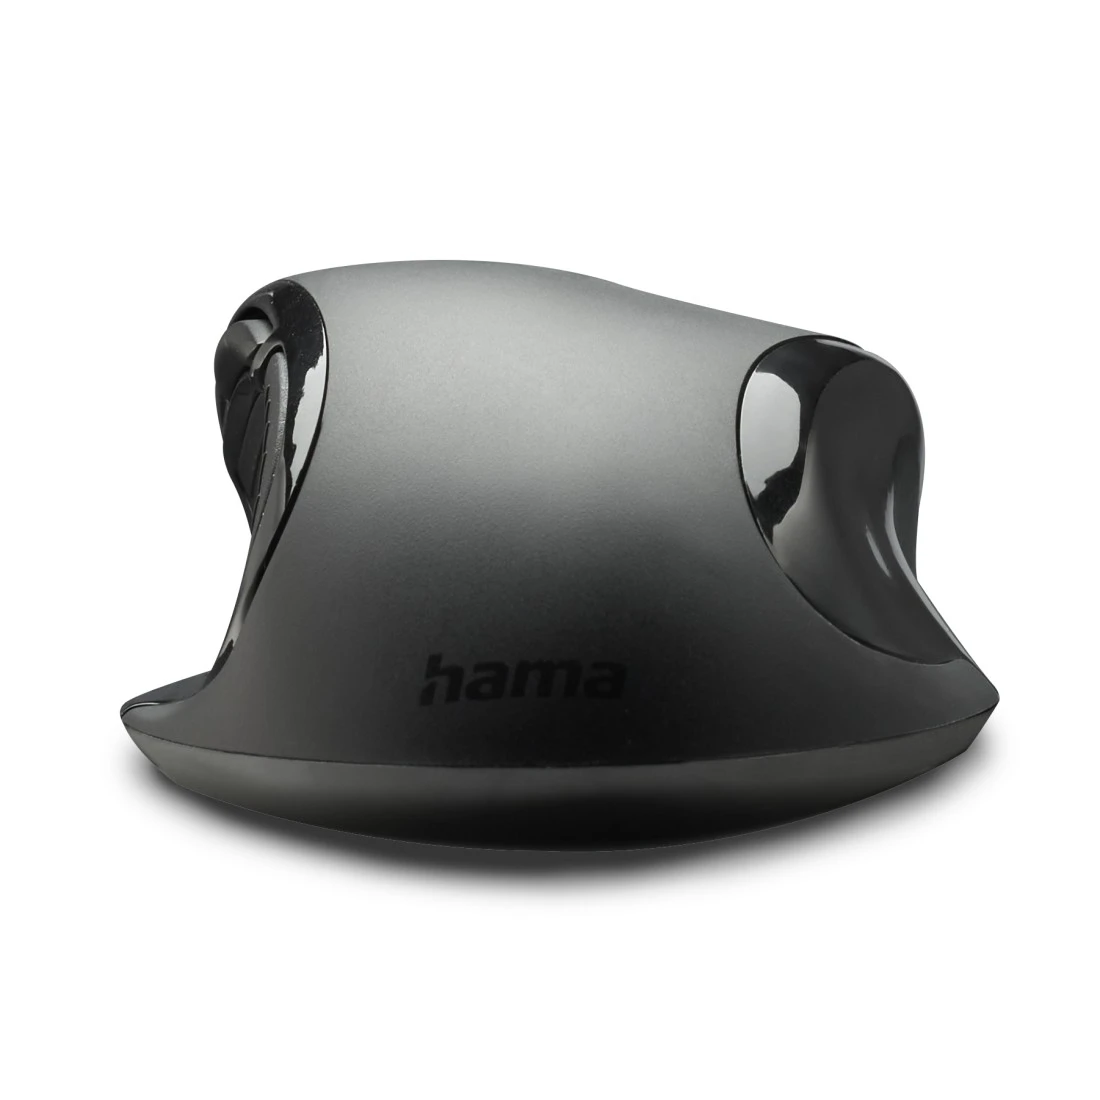 Hama 00173015 MW-900 7-Button Laser Wireless Mouse, black